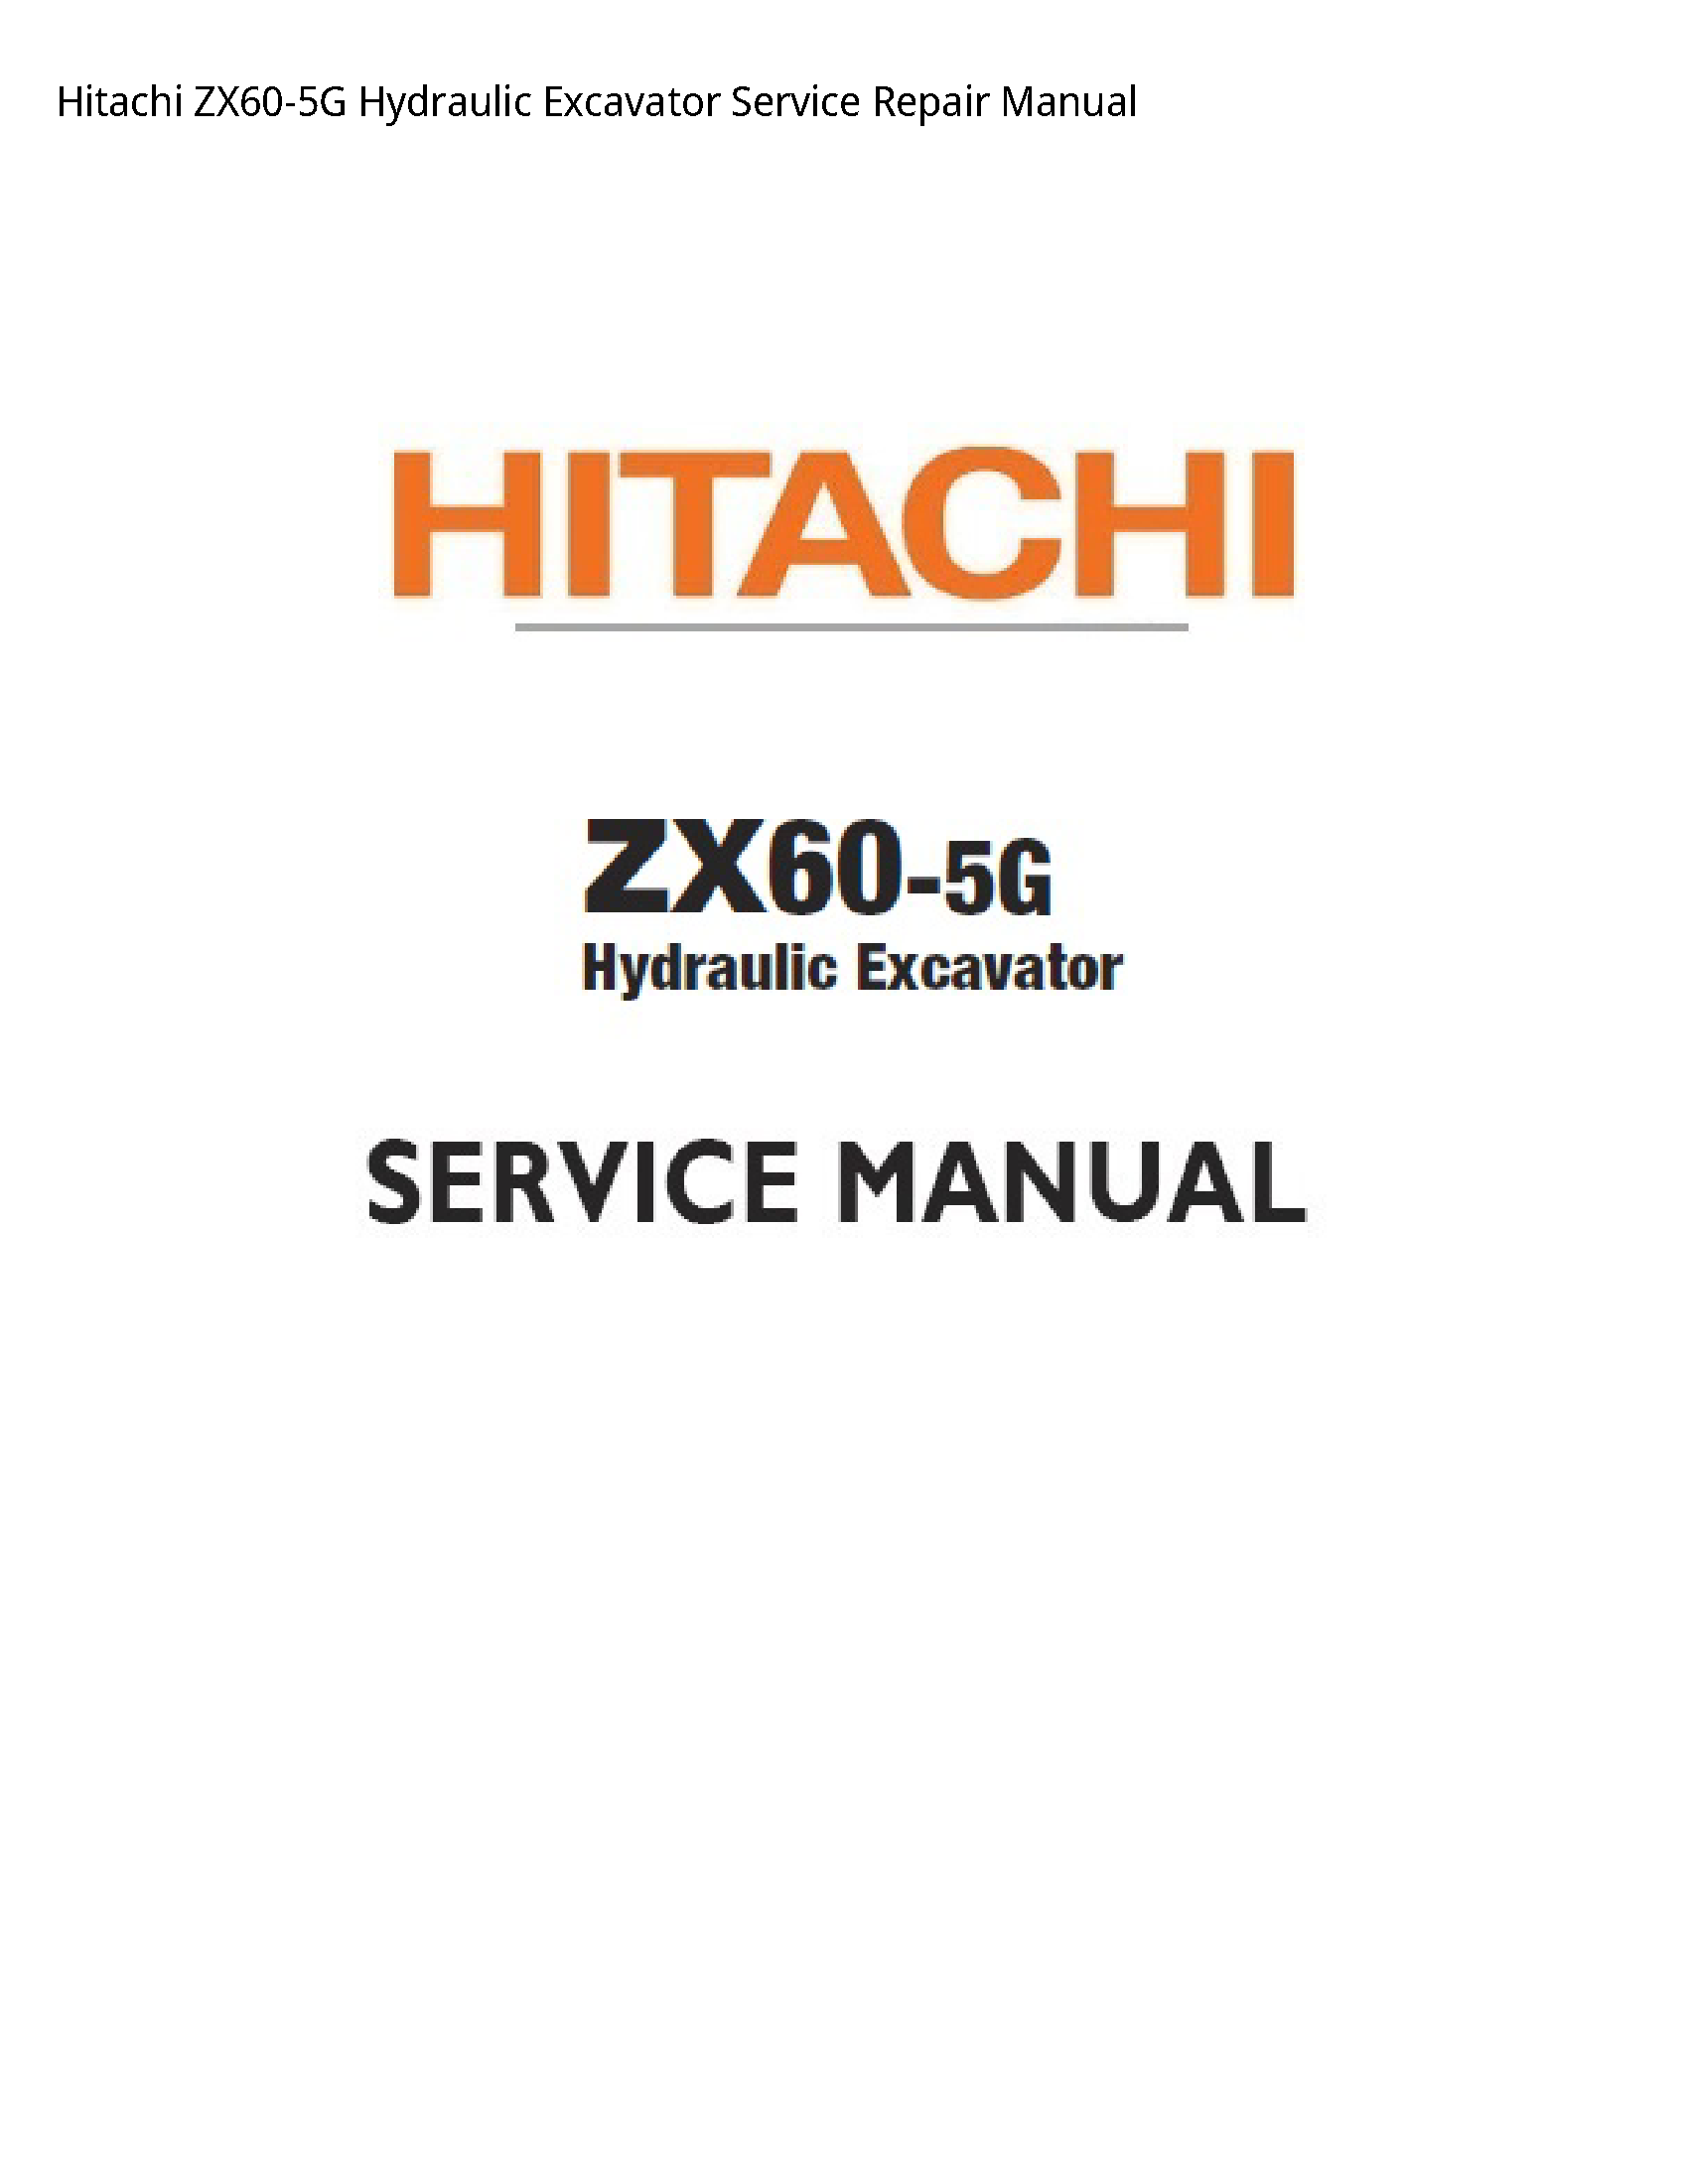 Hitachi ZX60-5G Hydraulic Excavator manual